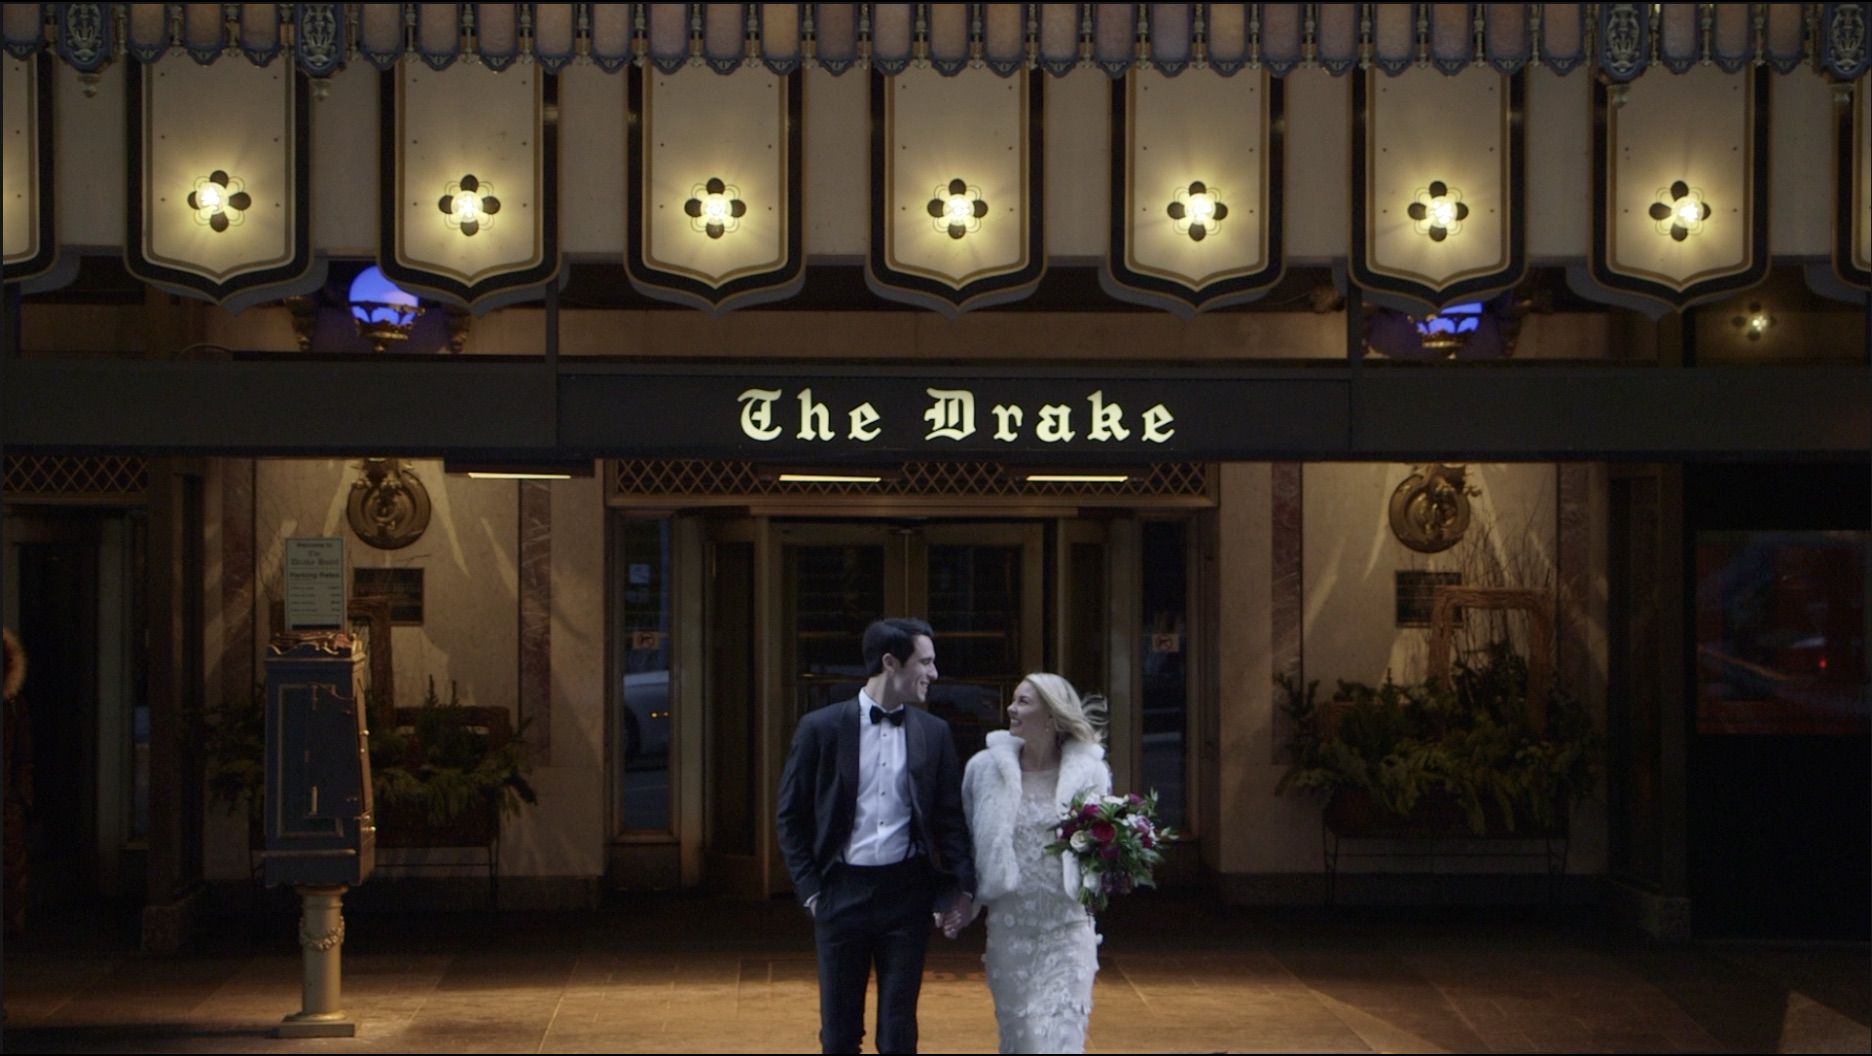 The Drake Chicago Winter Wedding Video / Drake hotel sign